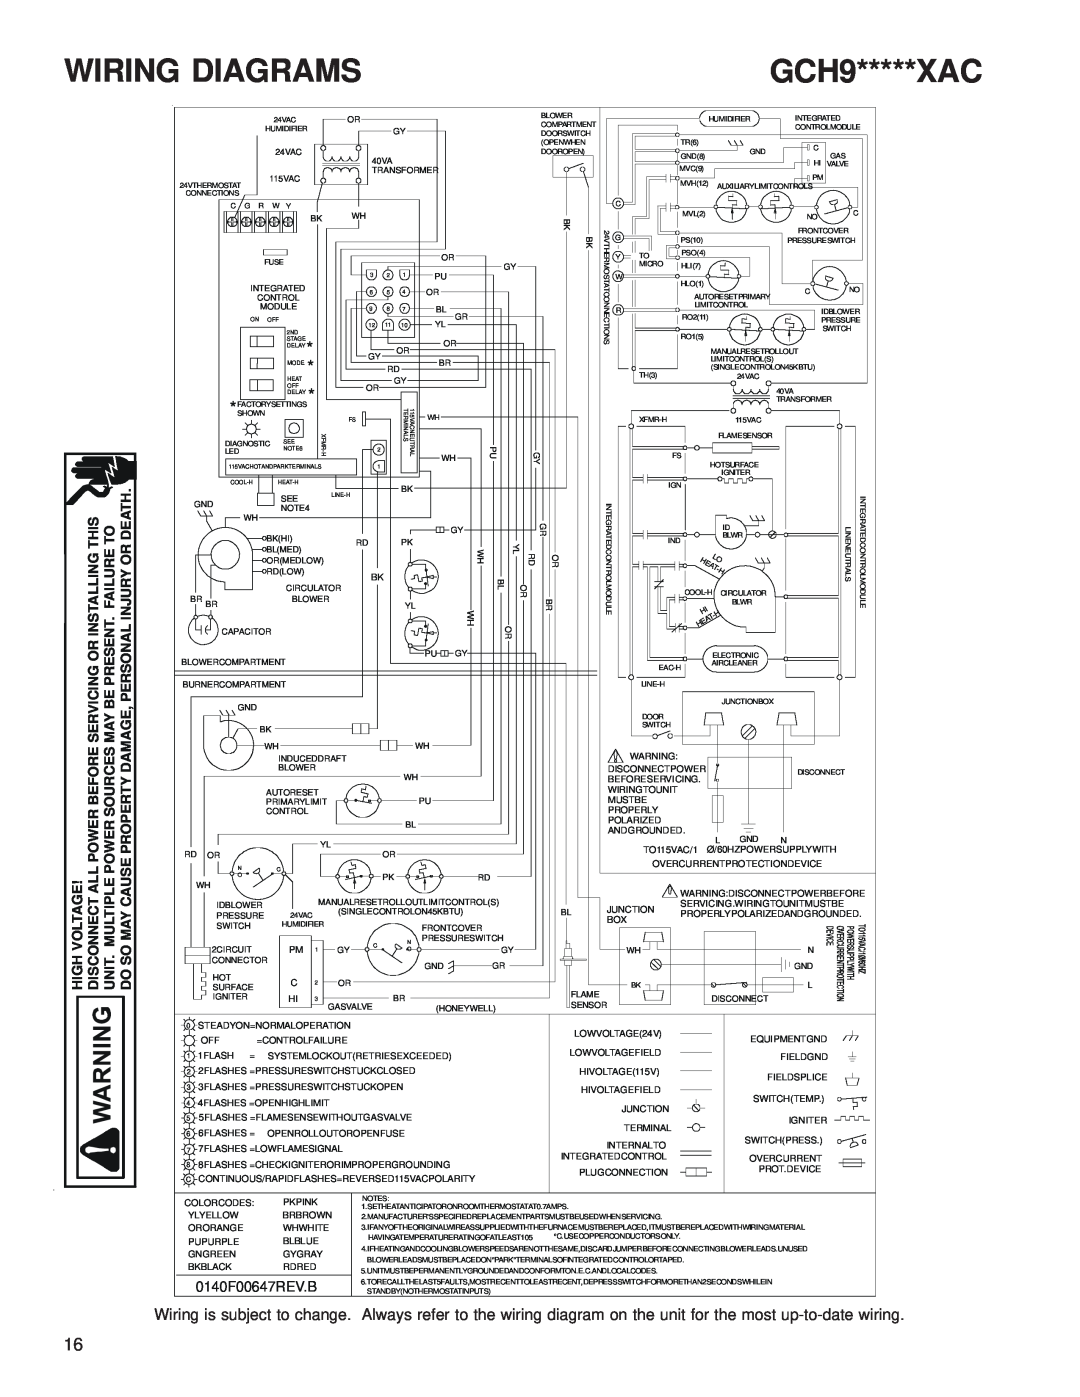 Goodman Mfg service manual GCH9*****XAC, Wiring Diagrams, 0140F00647REV.B 